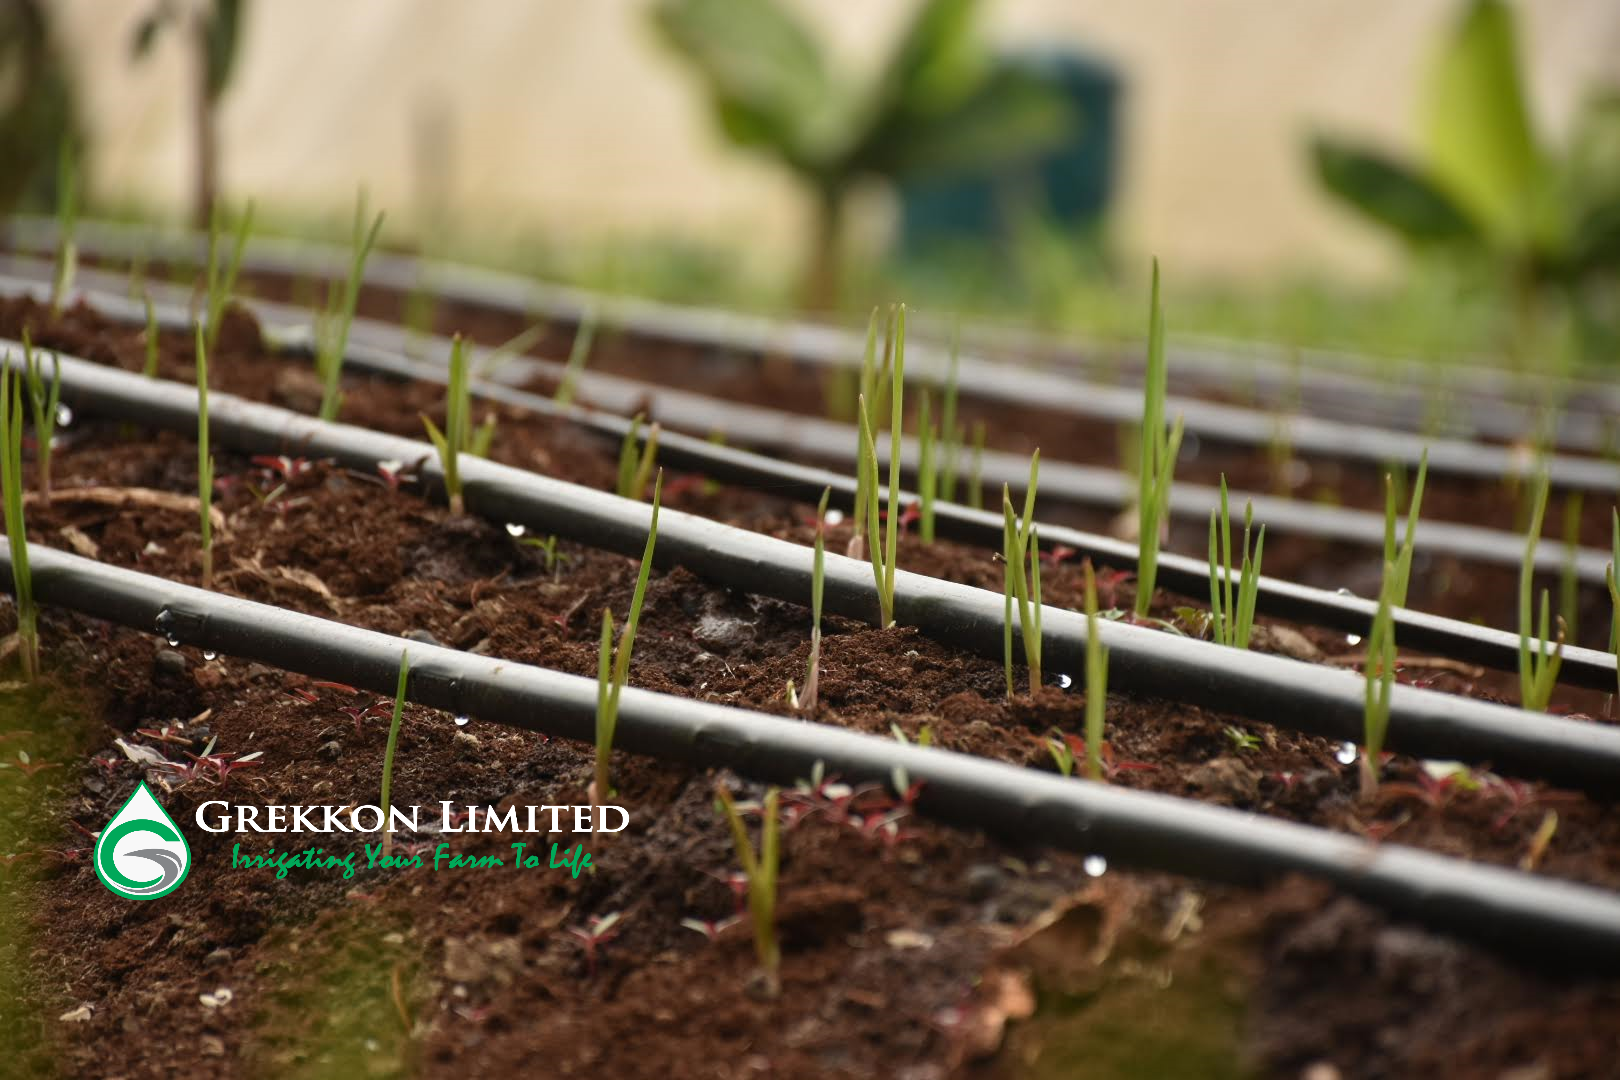 Drip Irrigation System in Kenya by Grekkon Limited